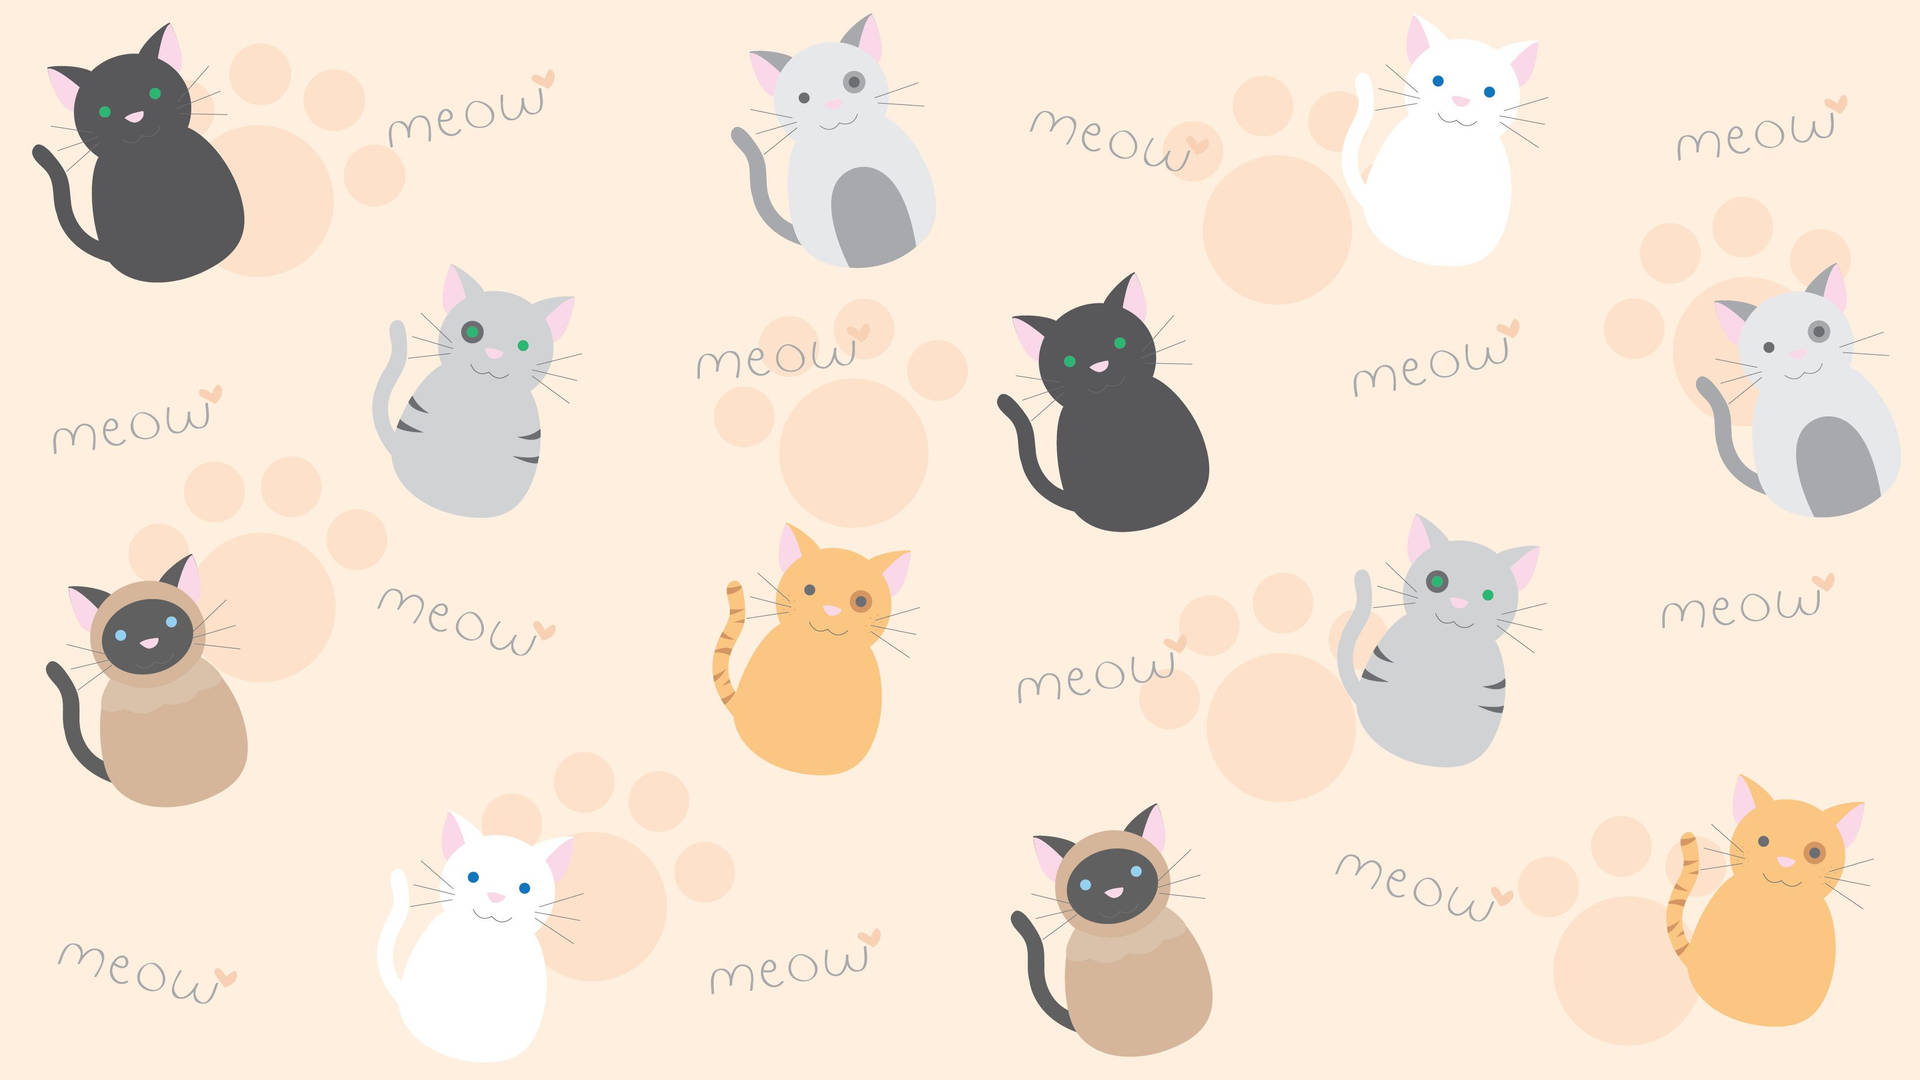 Cat And Meow Prints On Kawaii iPad Wallpaper